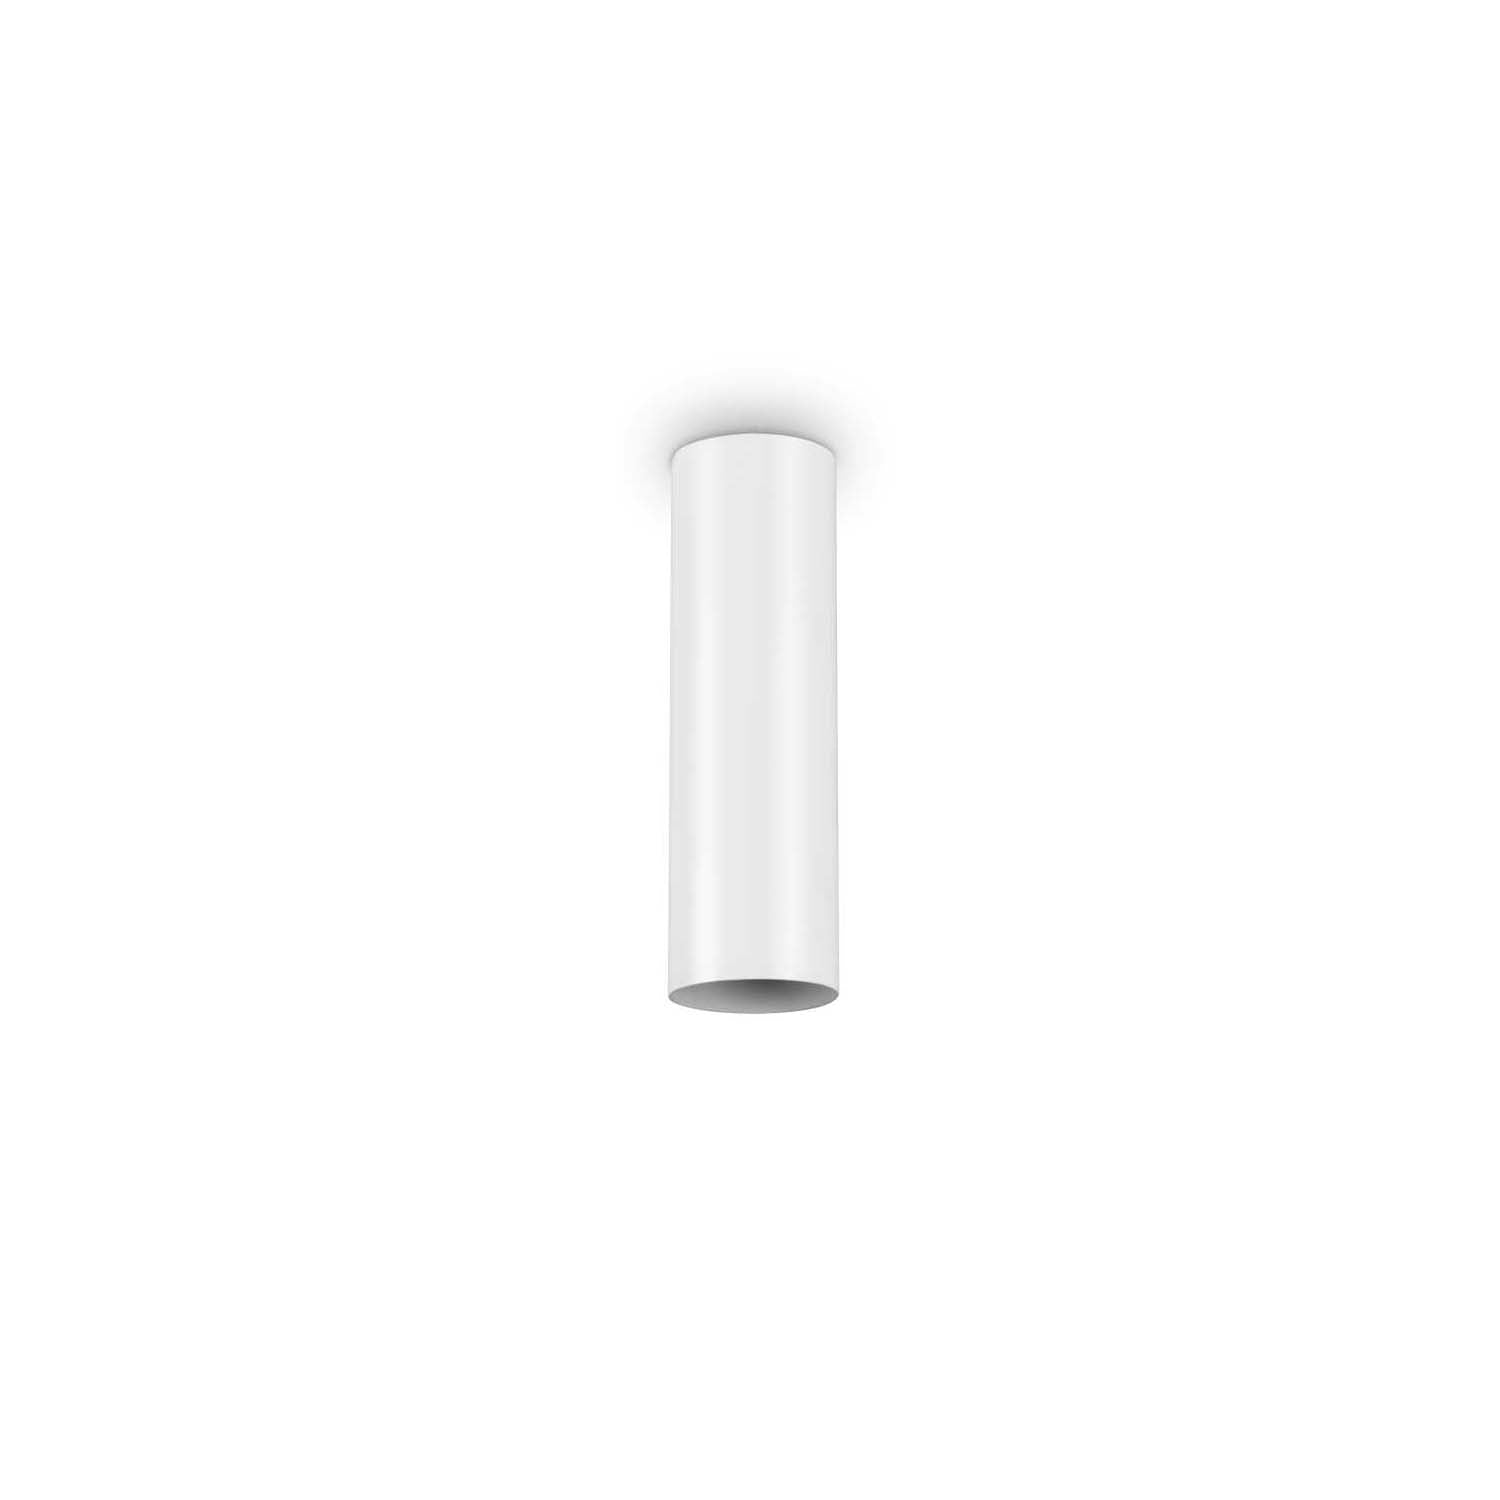 LOOK - Plafonnier spot long tube noir ou blanc design